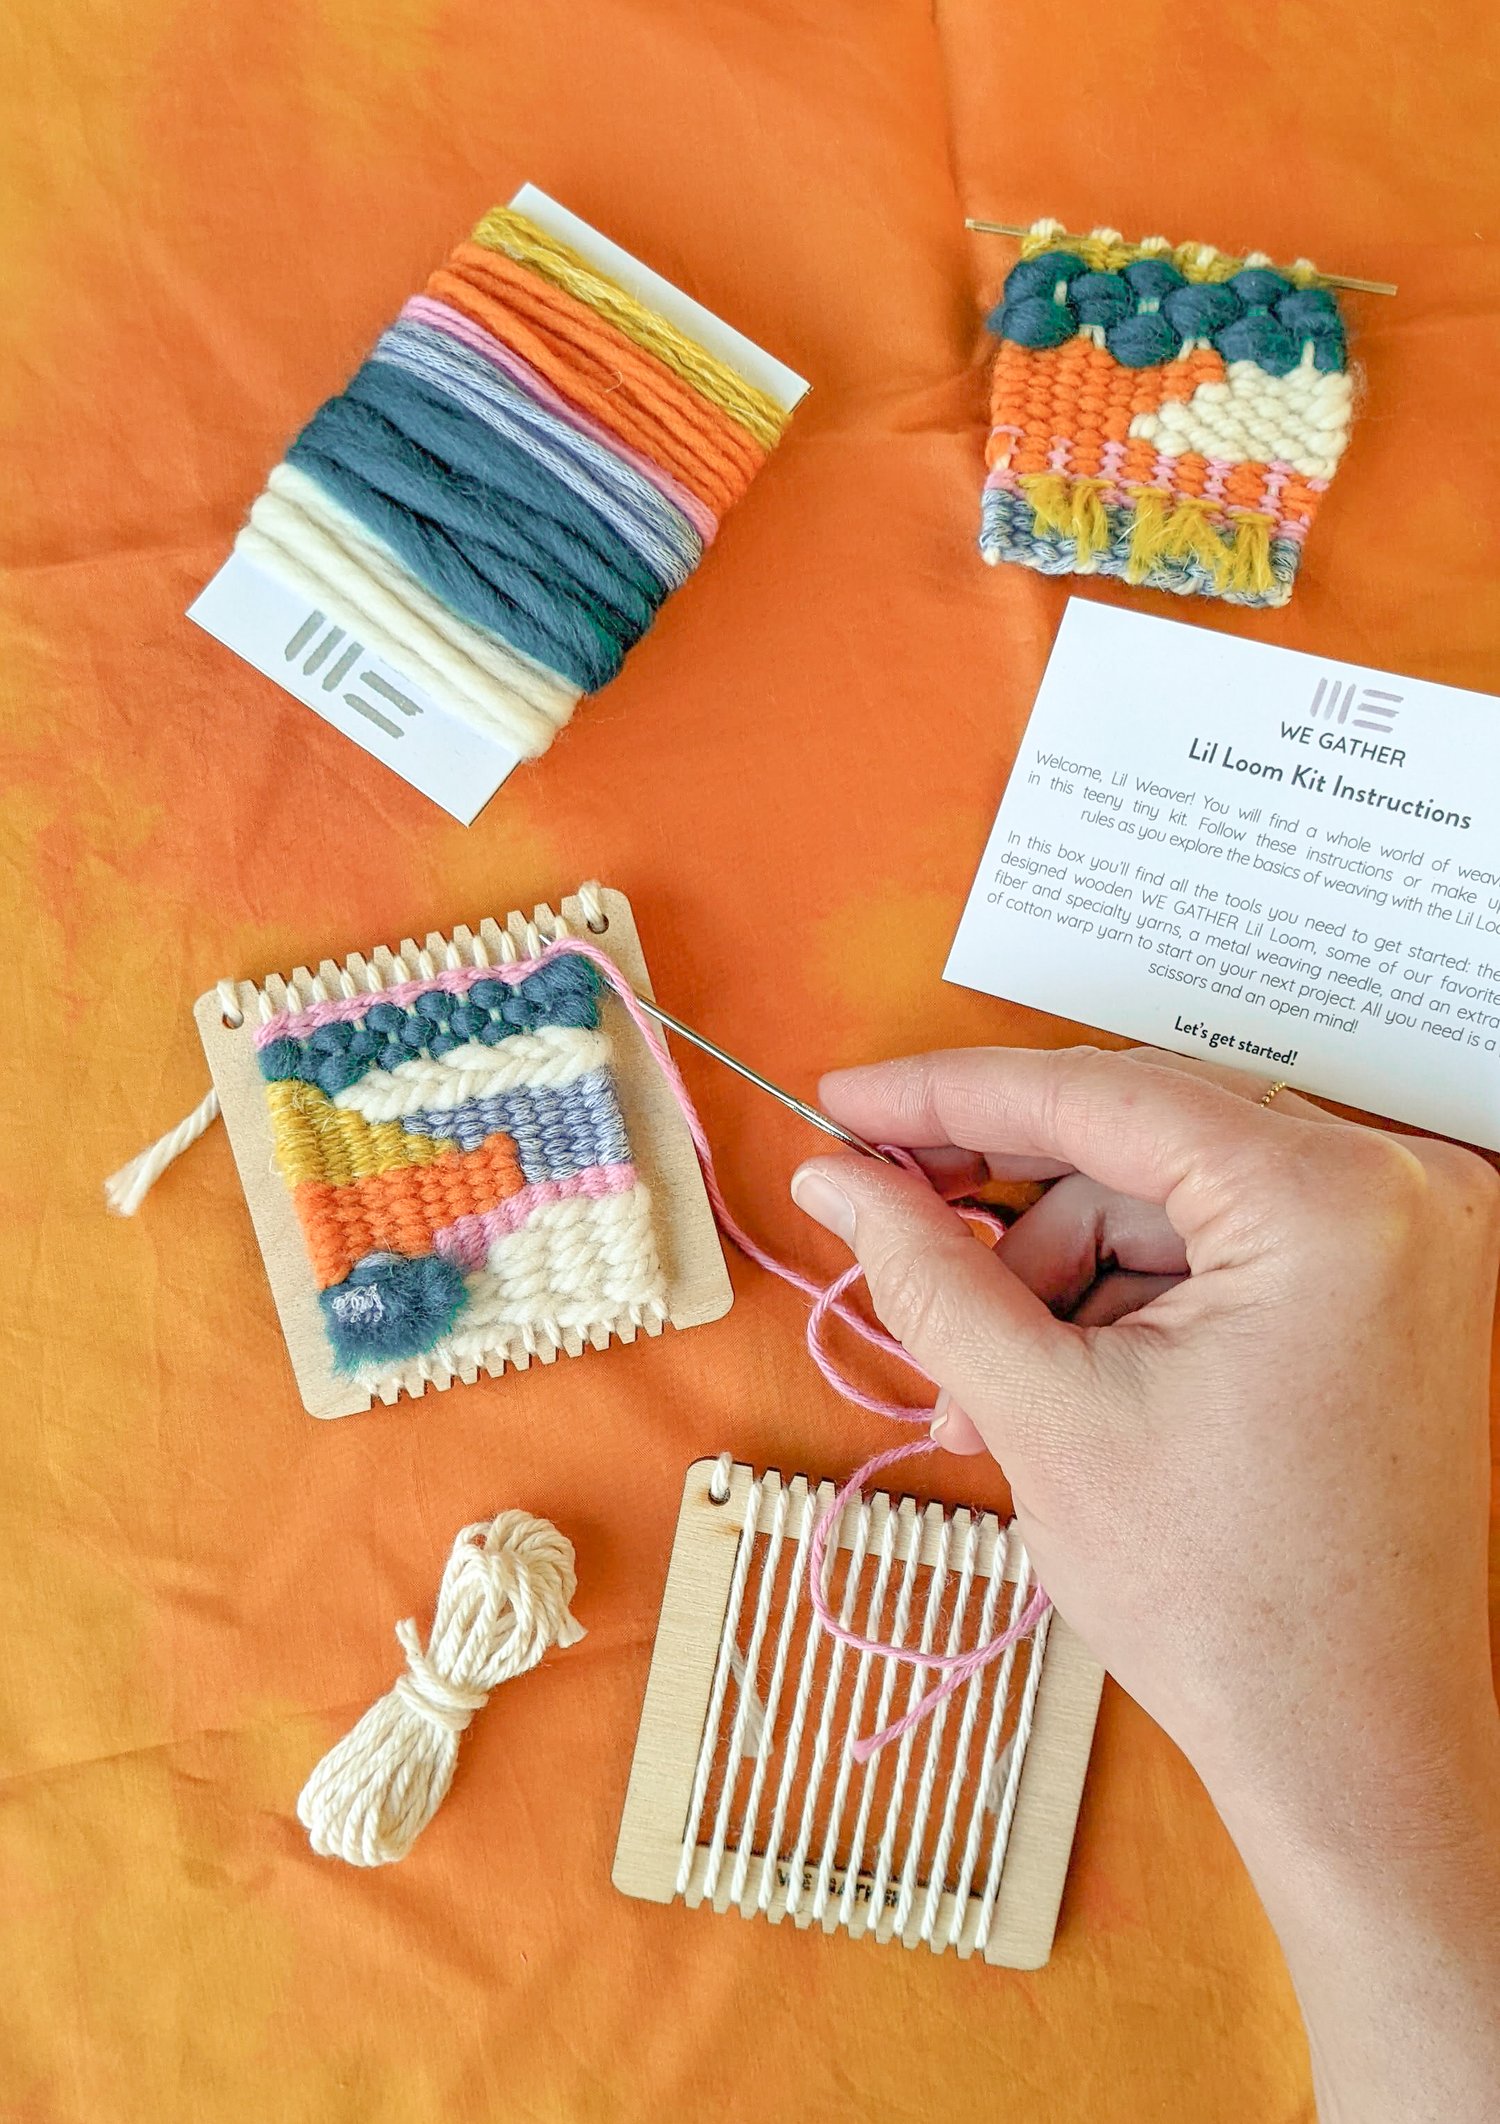 My take on innovating weaving - that darn mini loom : r/weaving